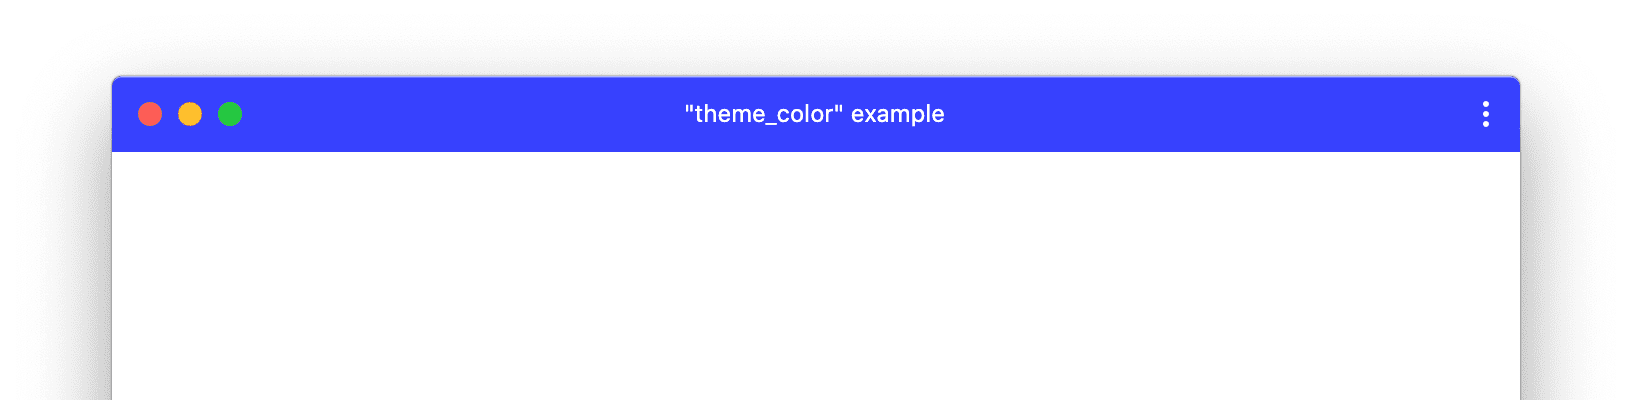 采用自定义 theme_color 的 PWA 窗口示例。